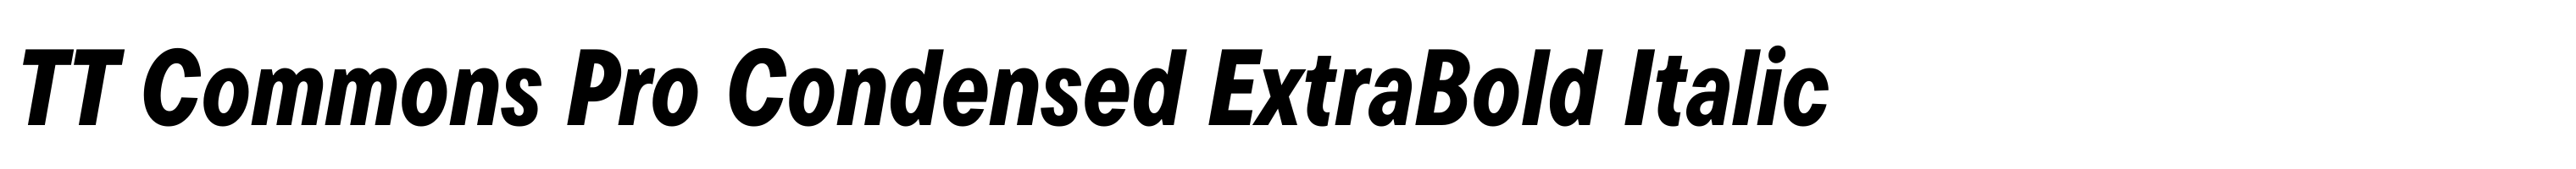 TT Commons Pro Condensed ExtraBold Italic